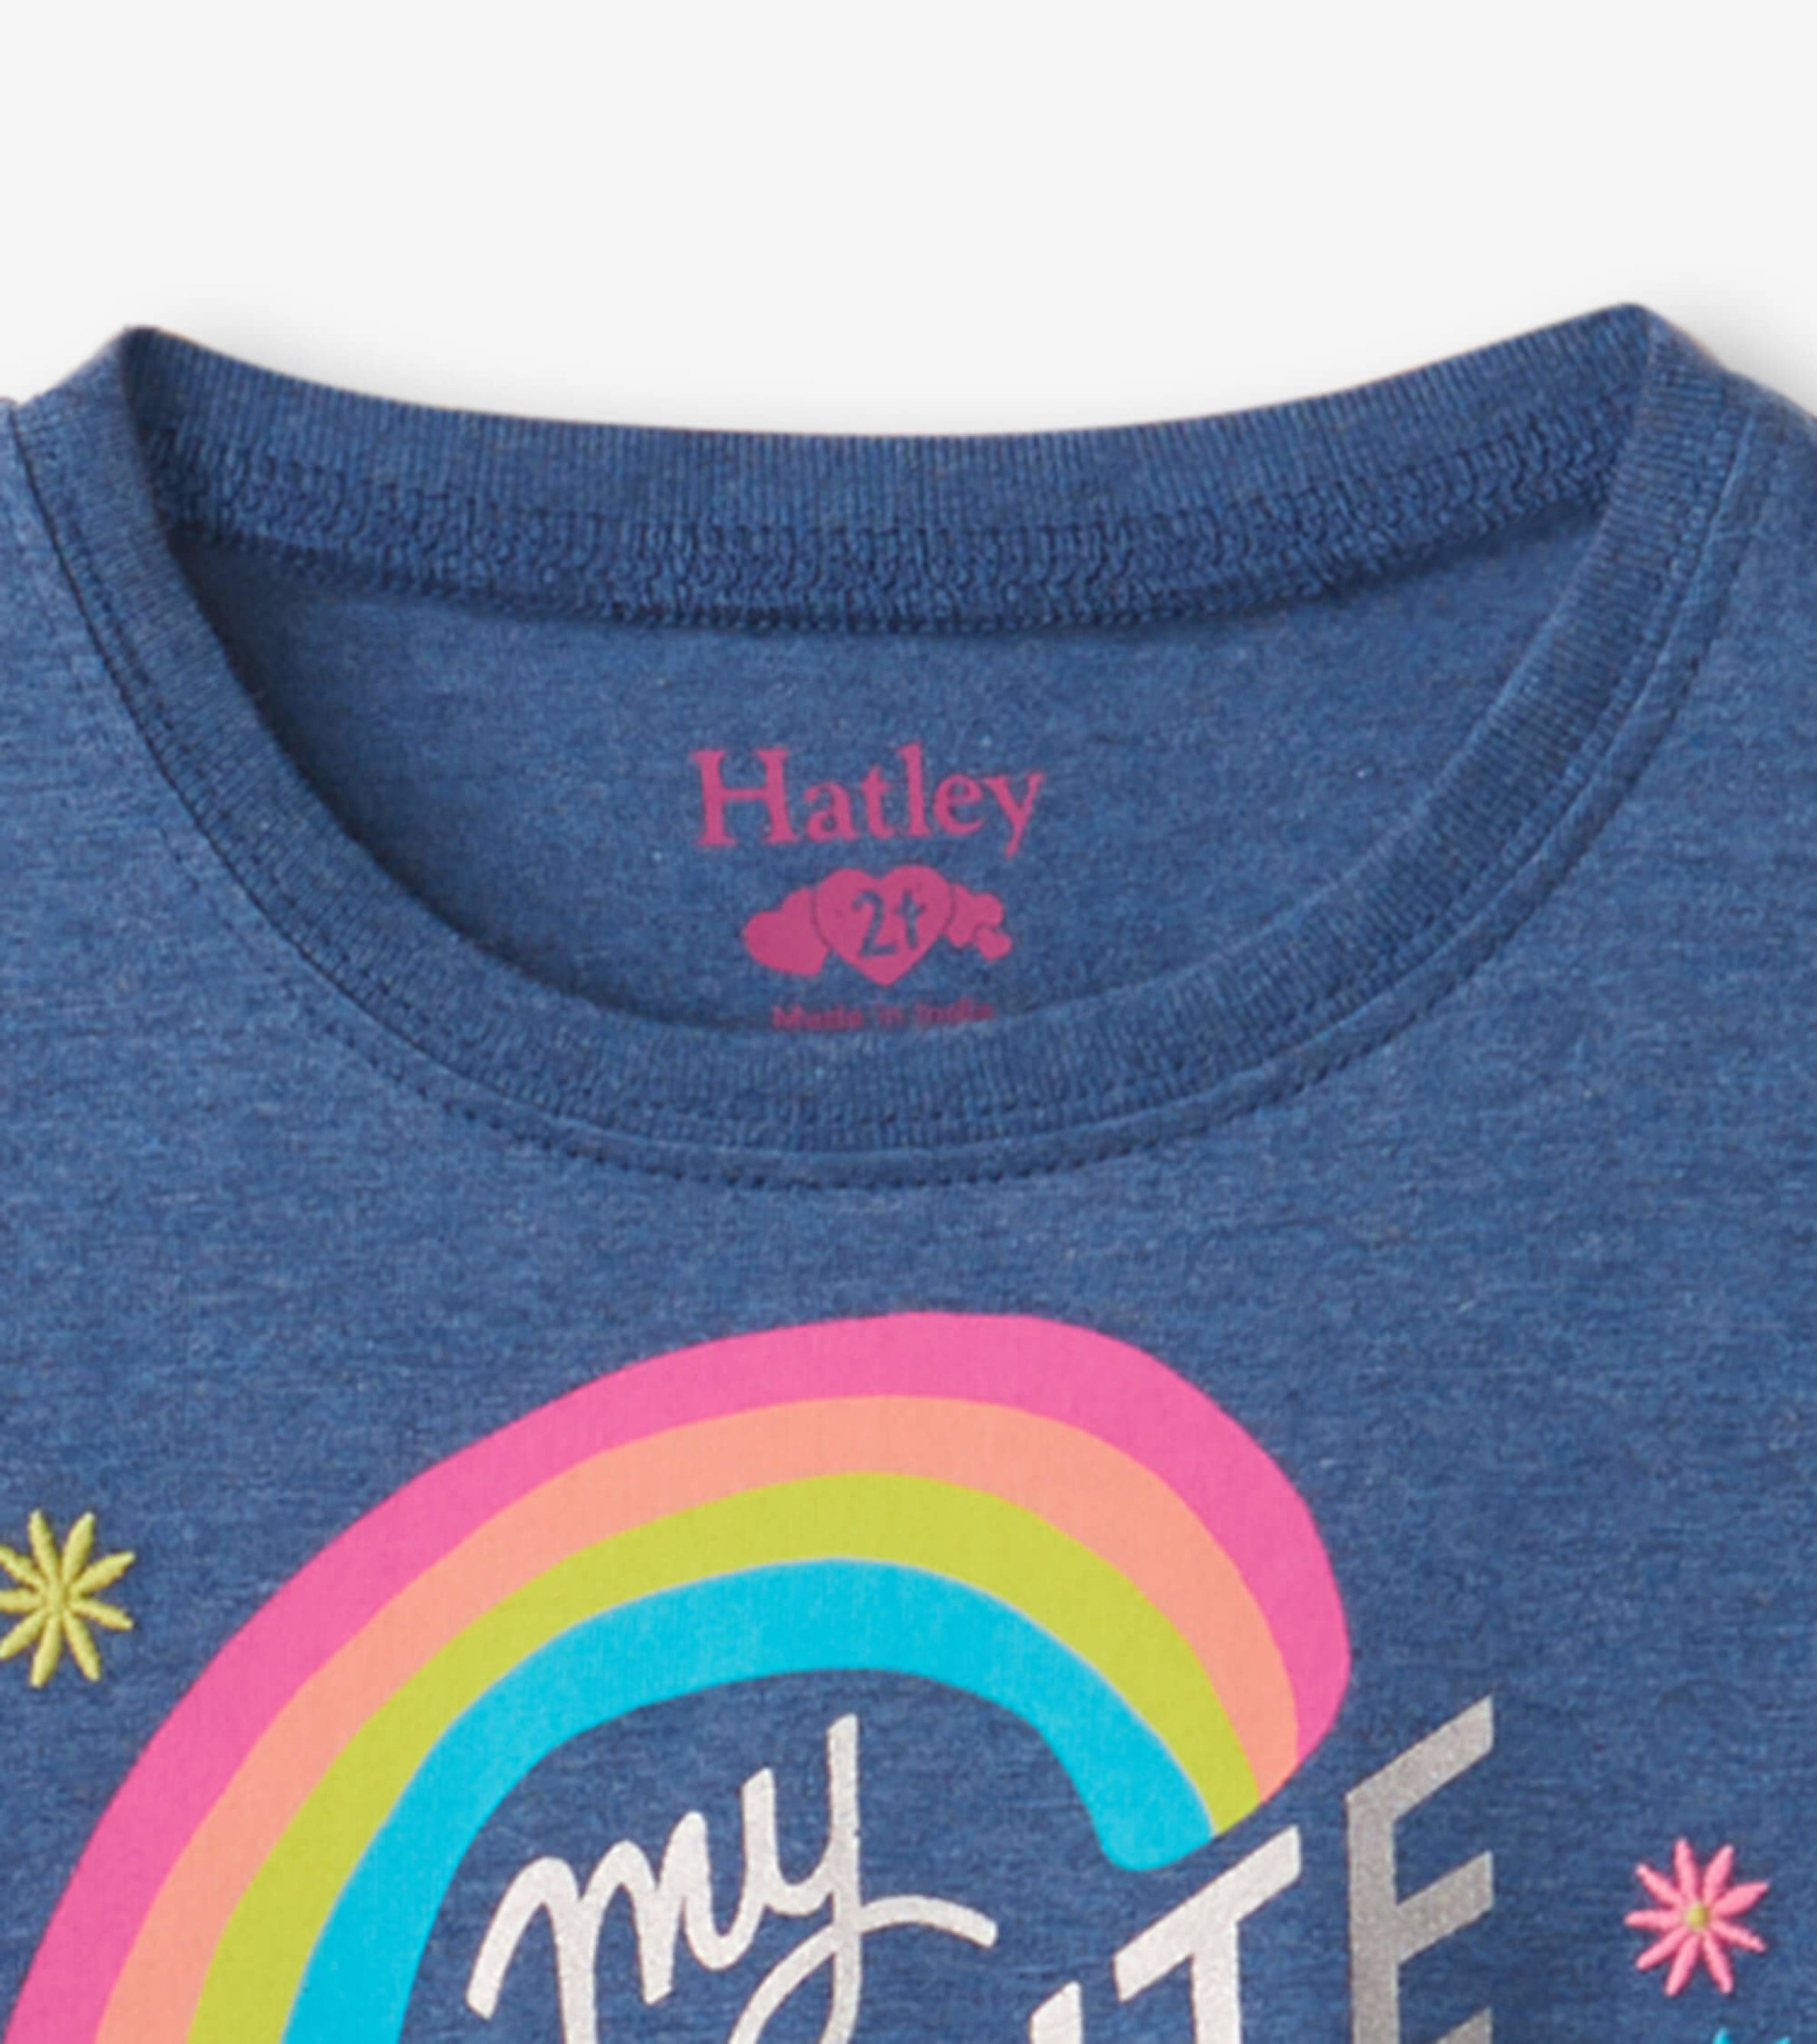 Toddler Girl Graphic Rainbow Print Ruffled Long-sleeve Tee